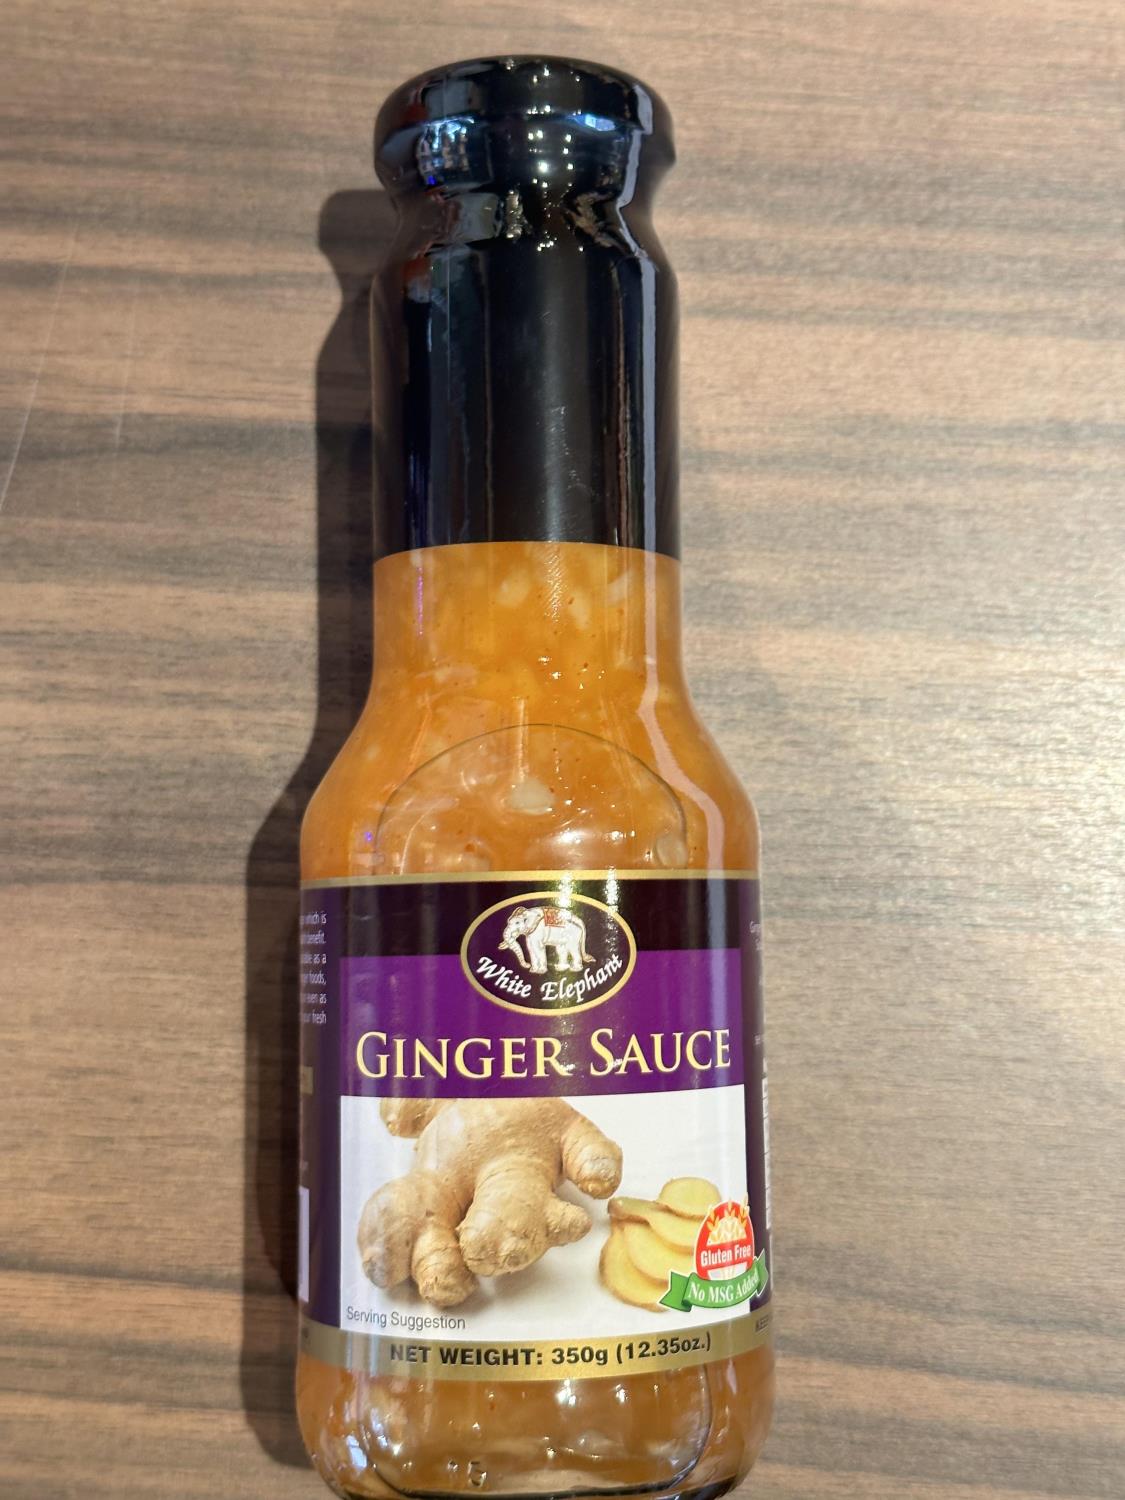 Ginger sauce